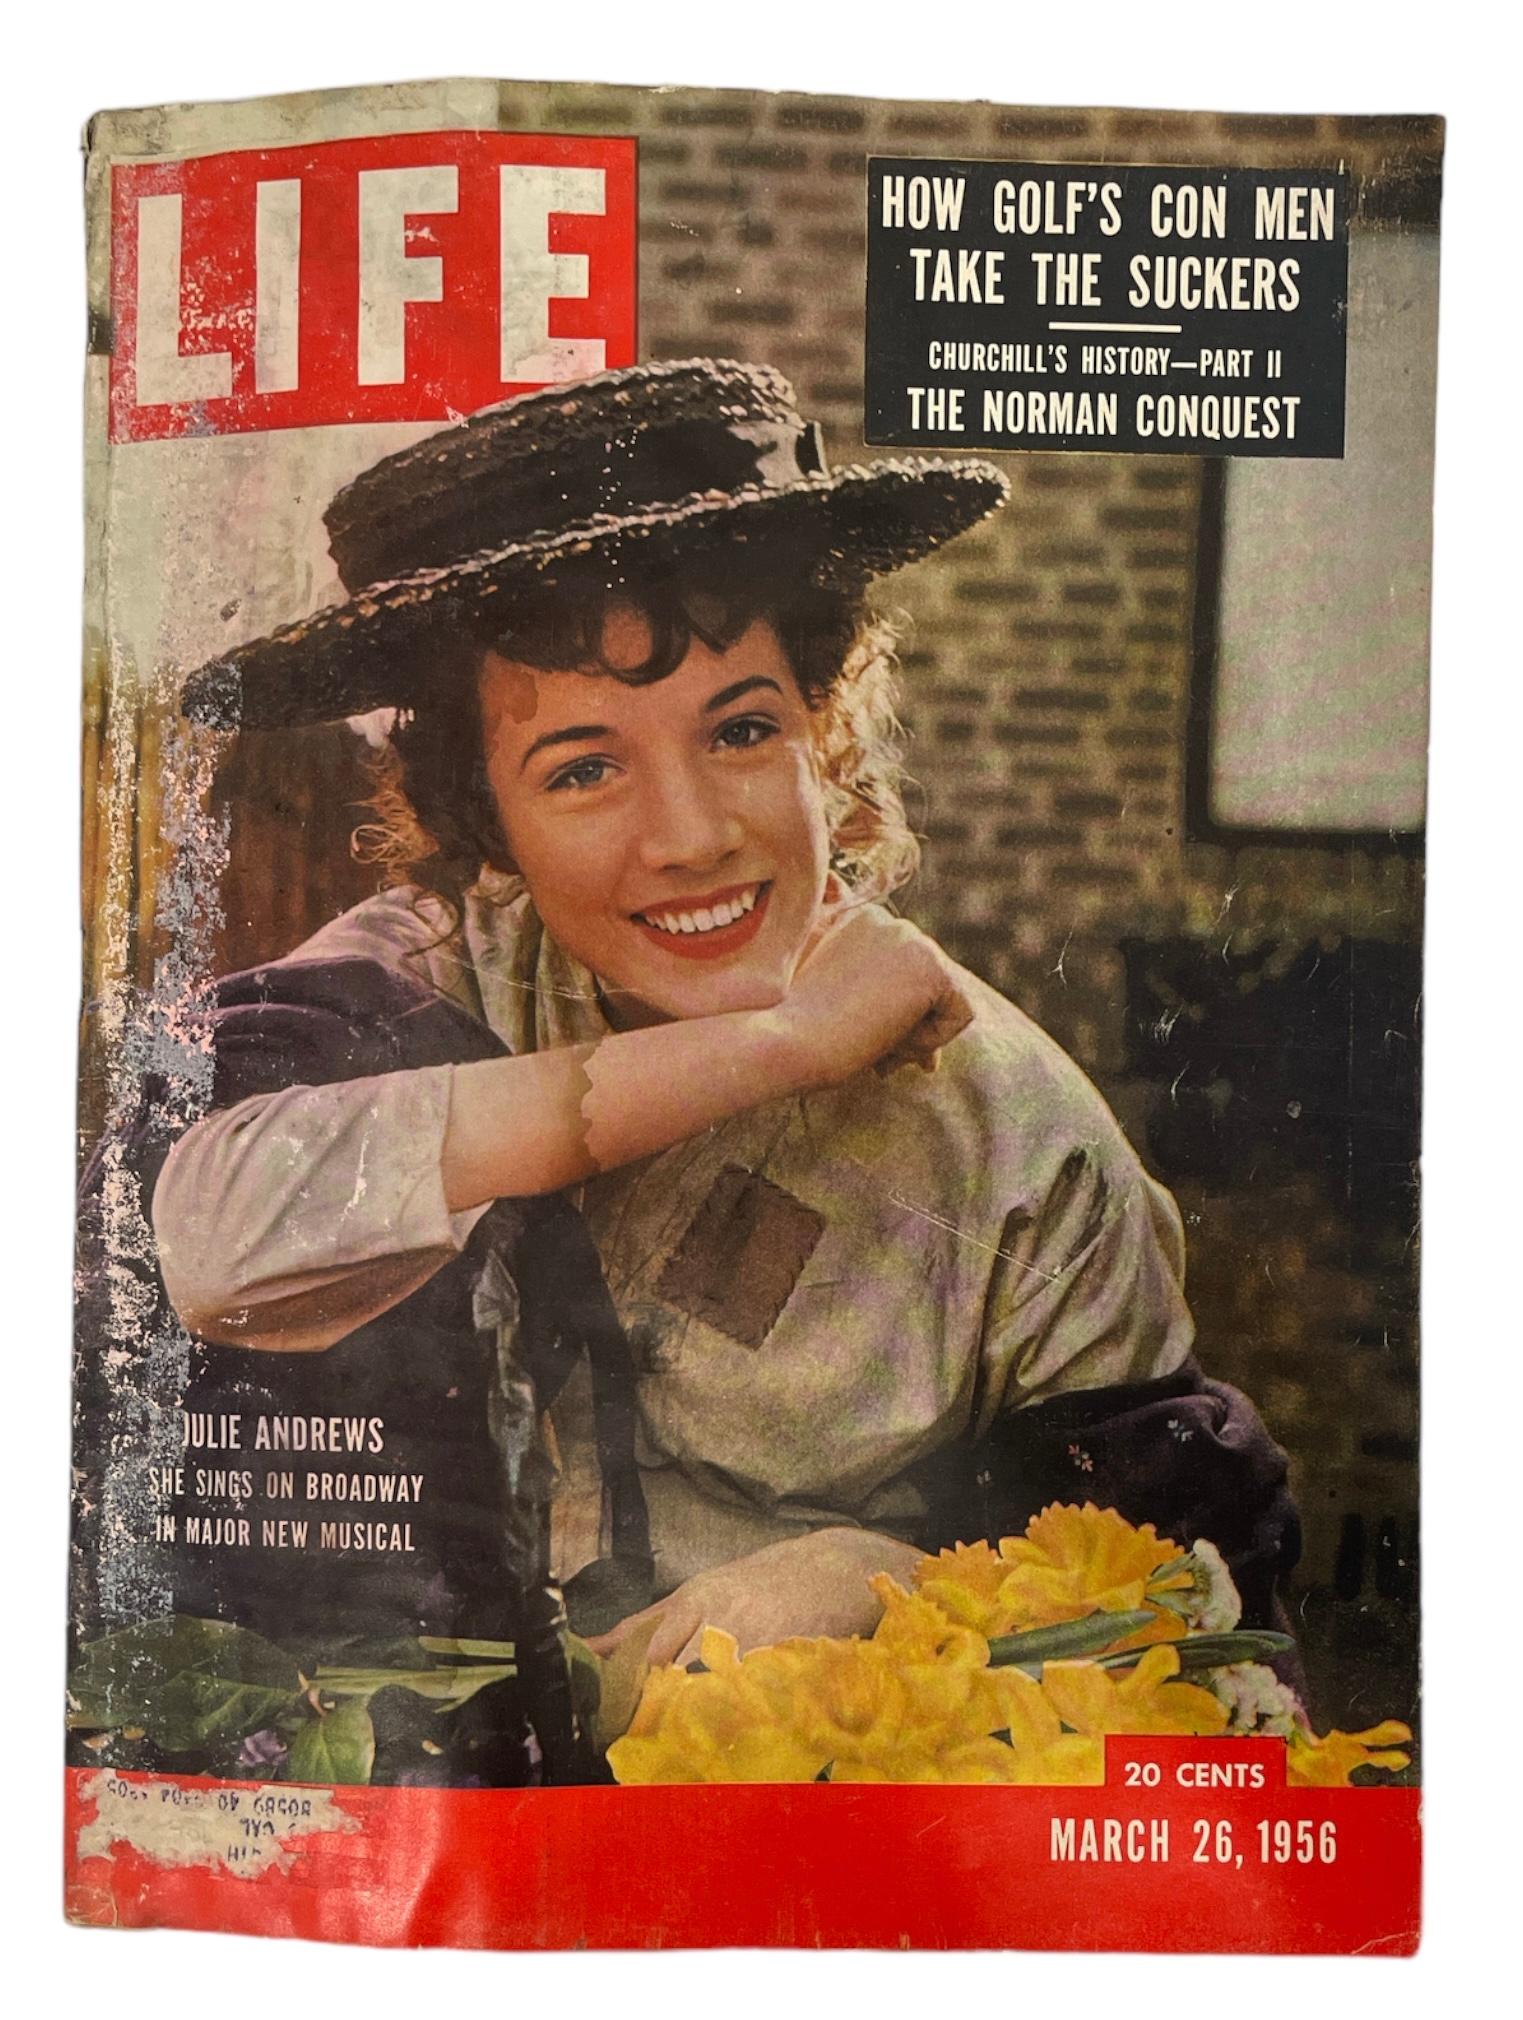 Vintage LIFE Magazines, Dolly Parton Concert Portfolio, and Saturday Evening Post